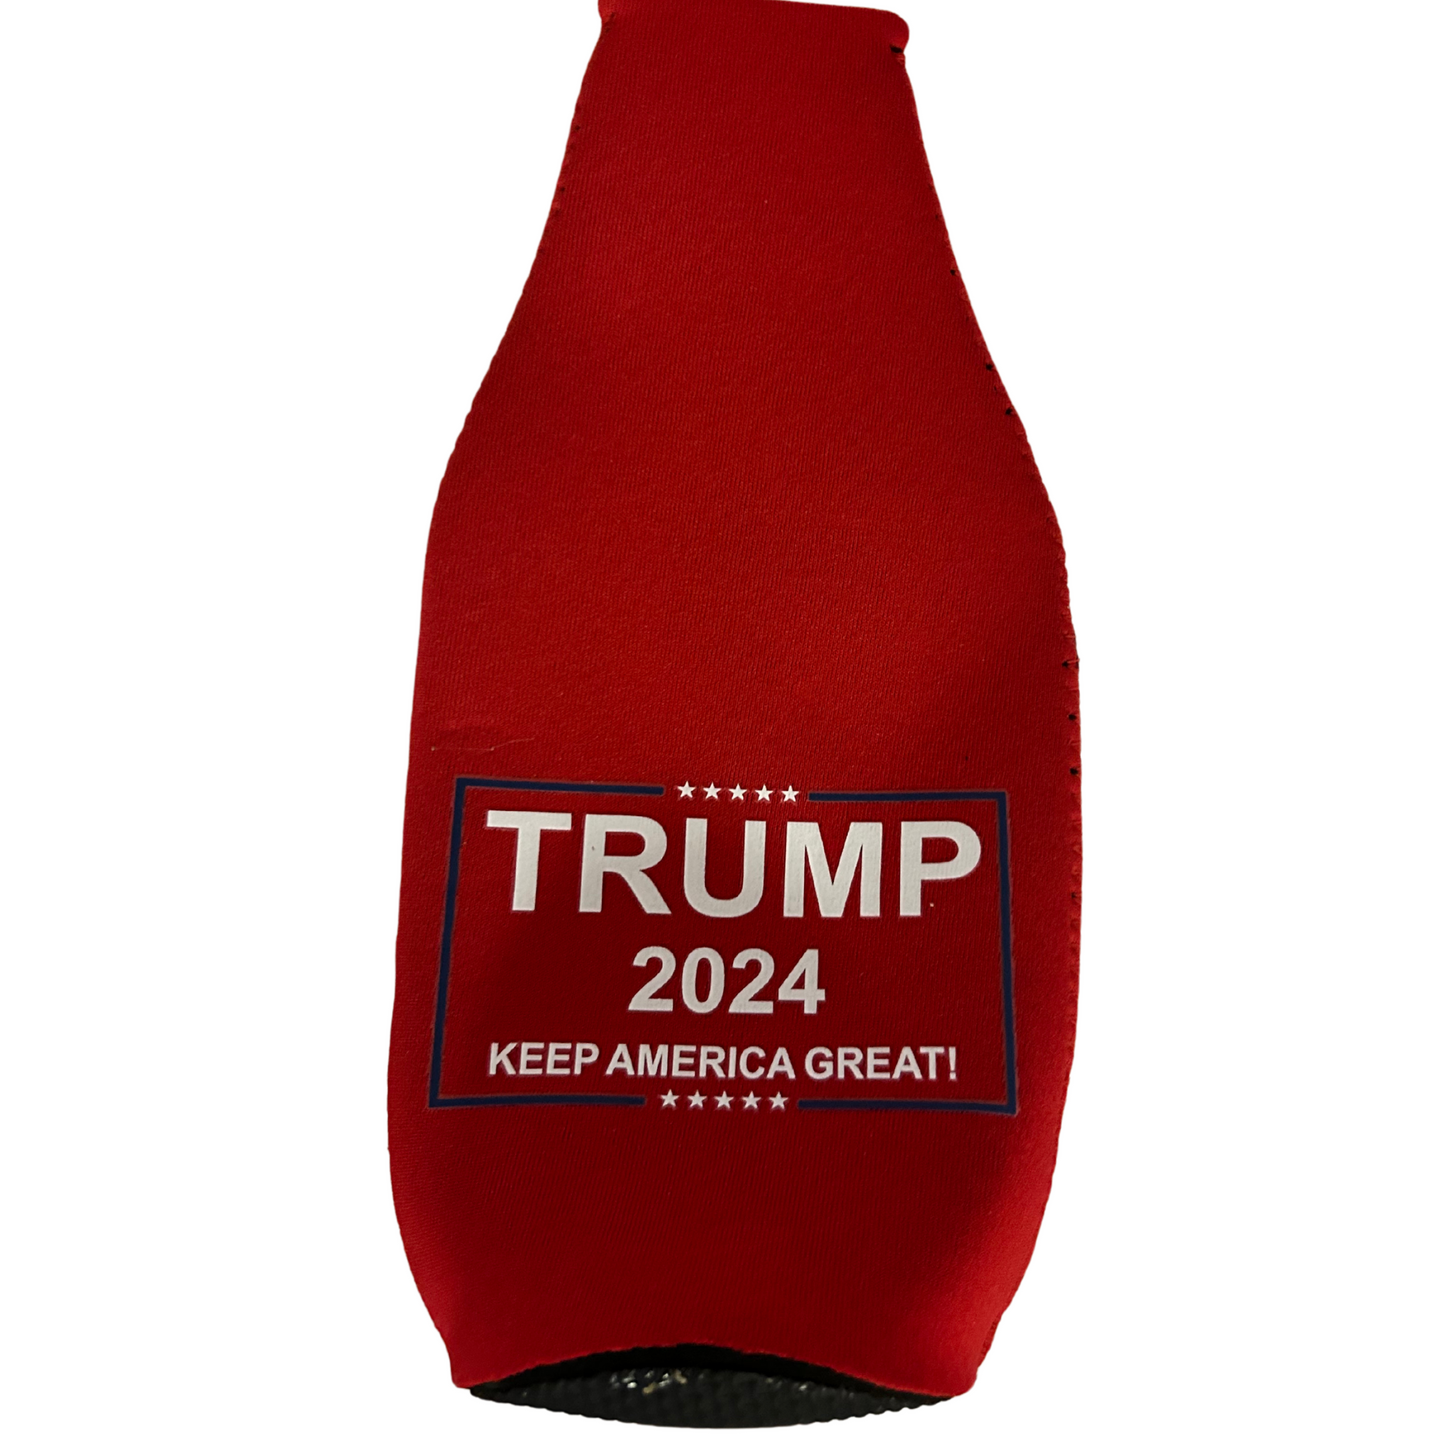 Trump 2024 Keep America Great Bottle Jacket